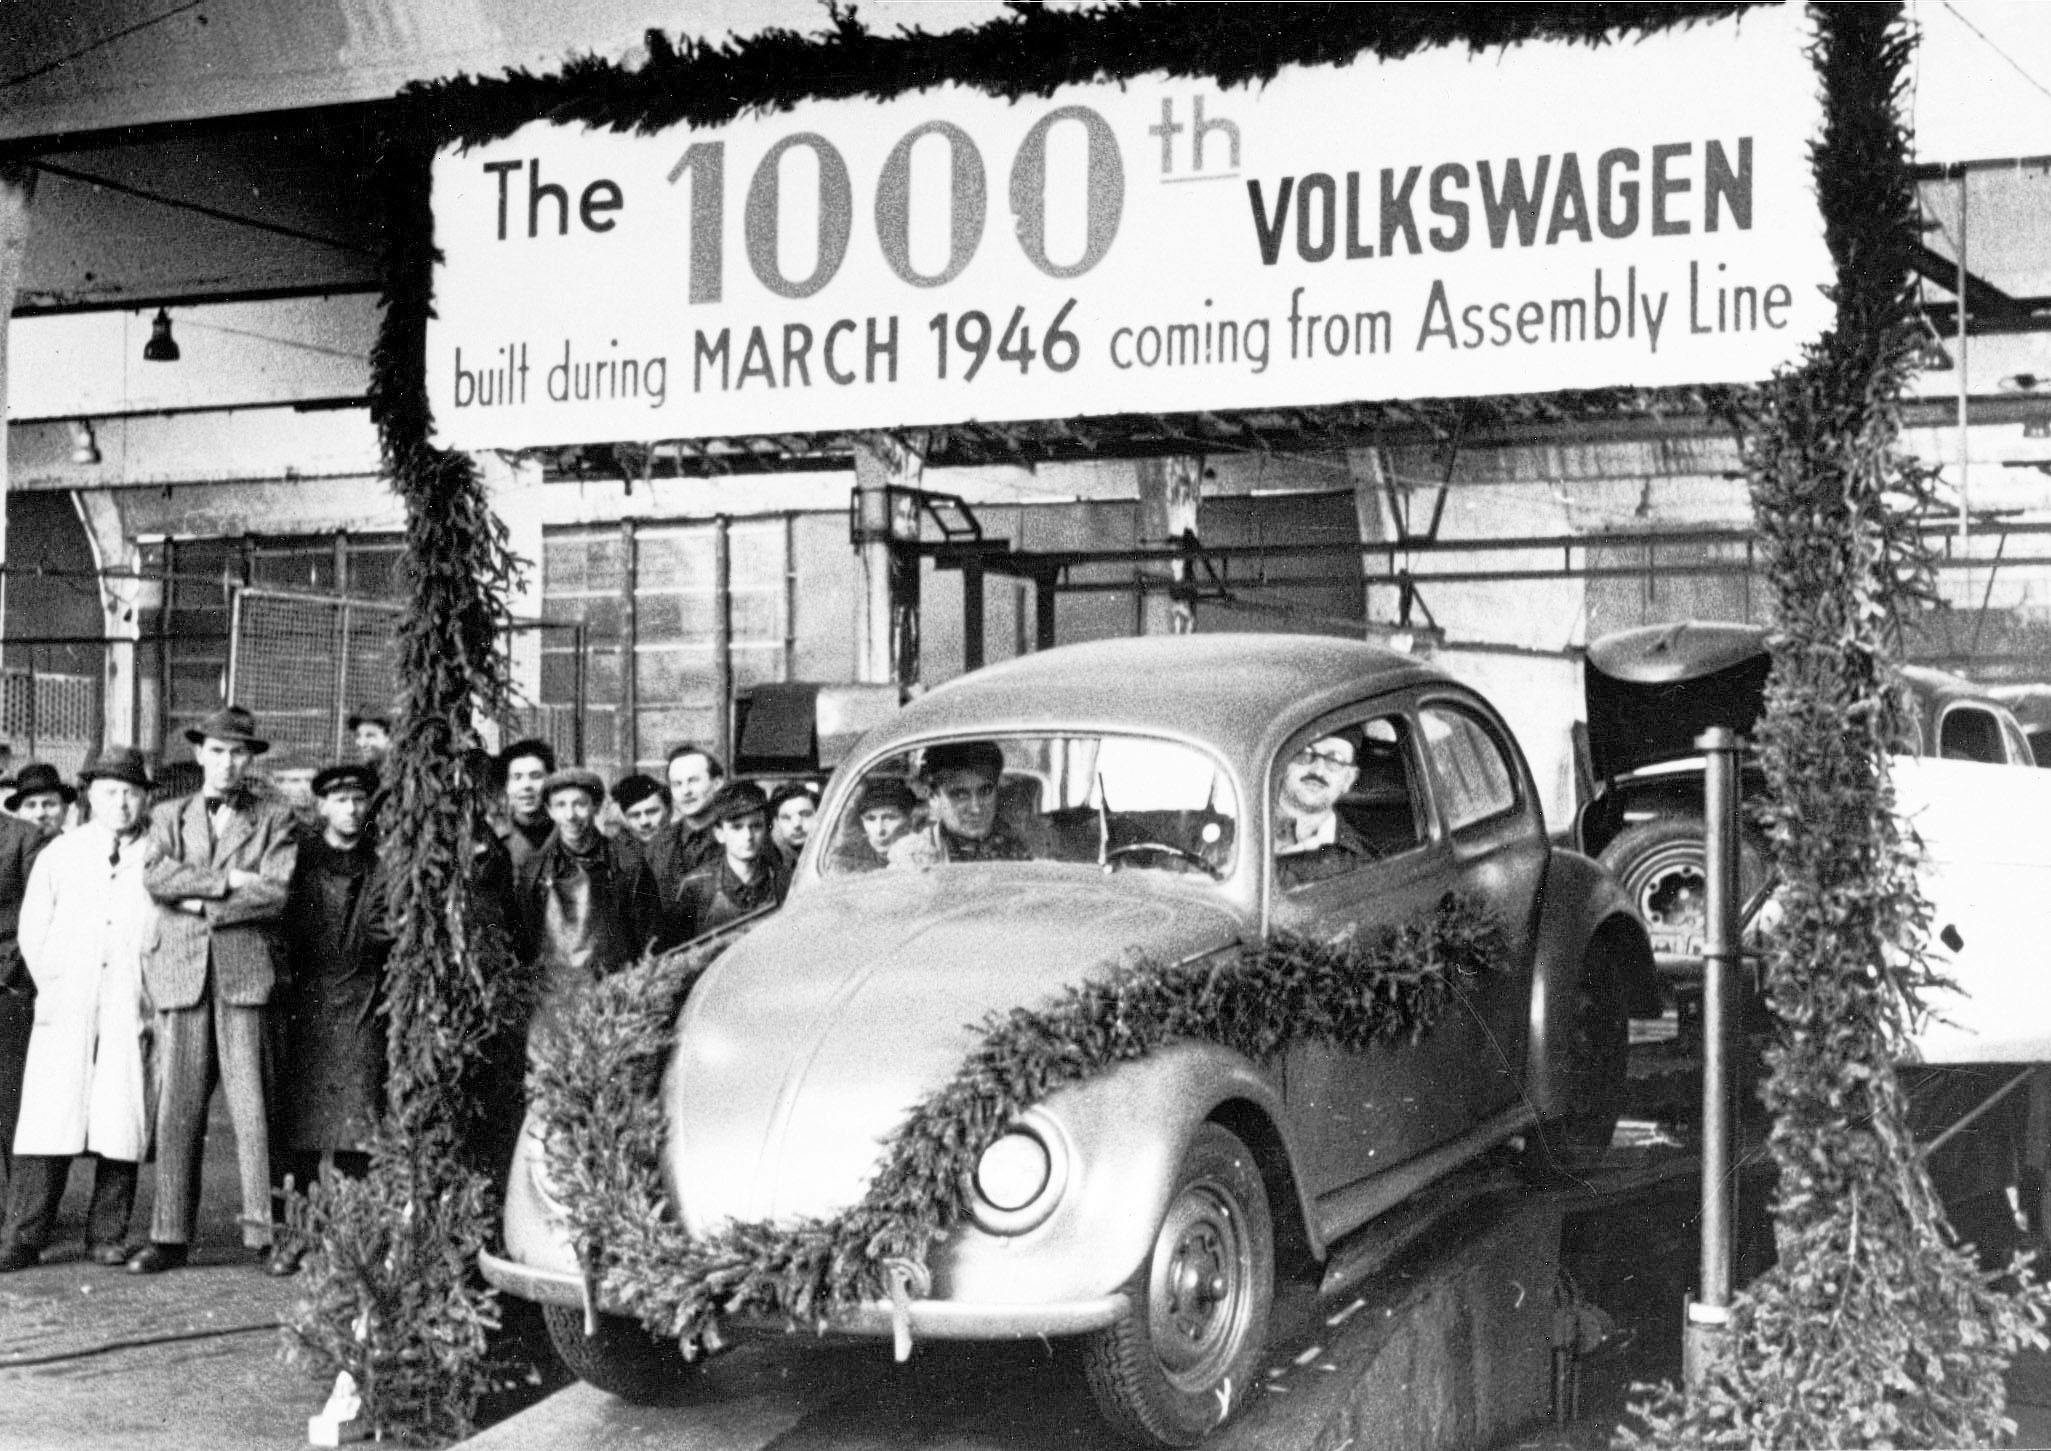 British take over Volkswagen 1945 - Production